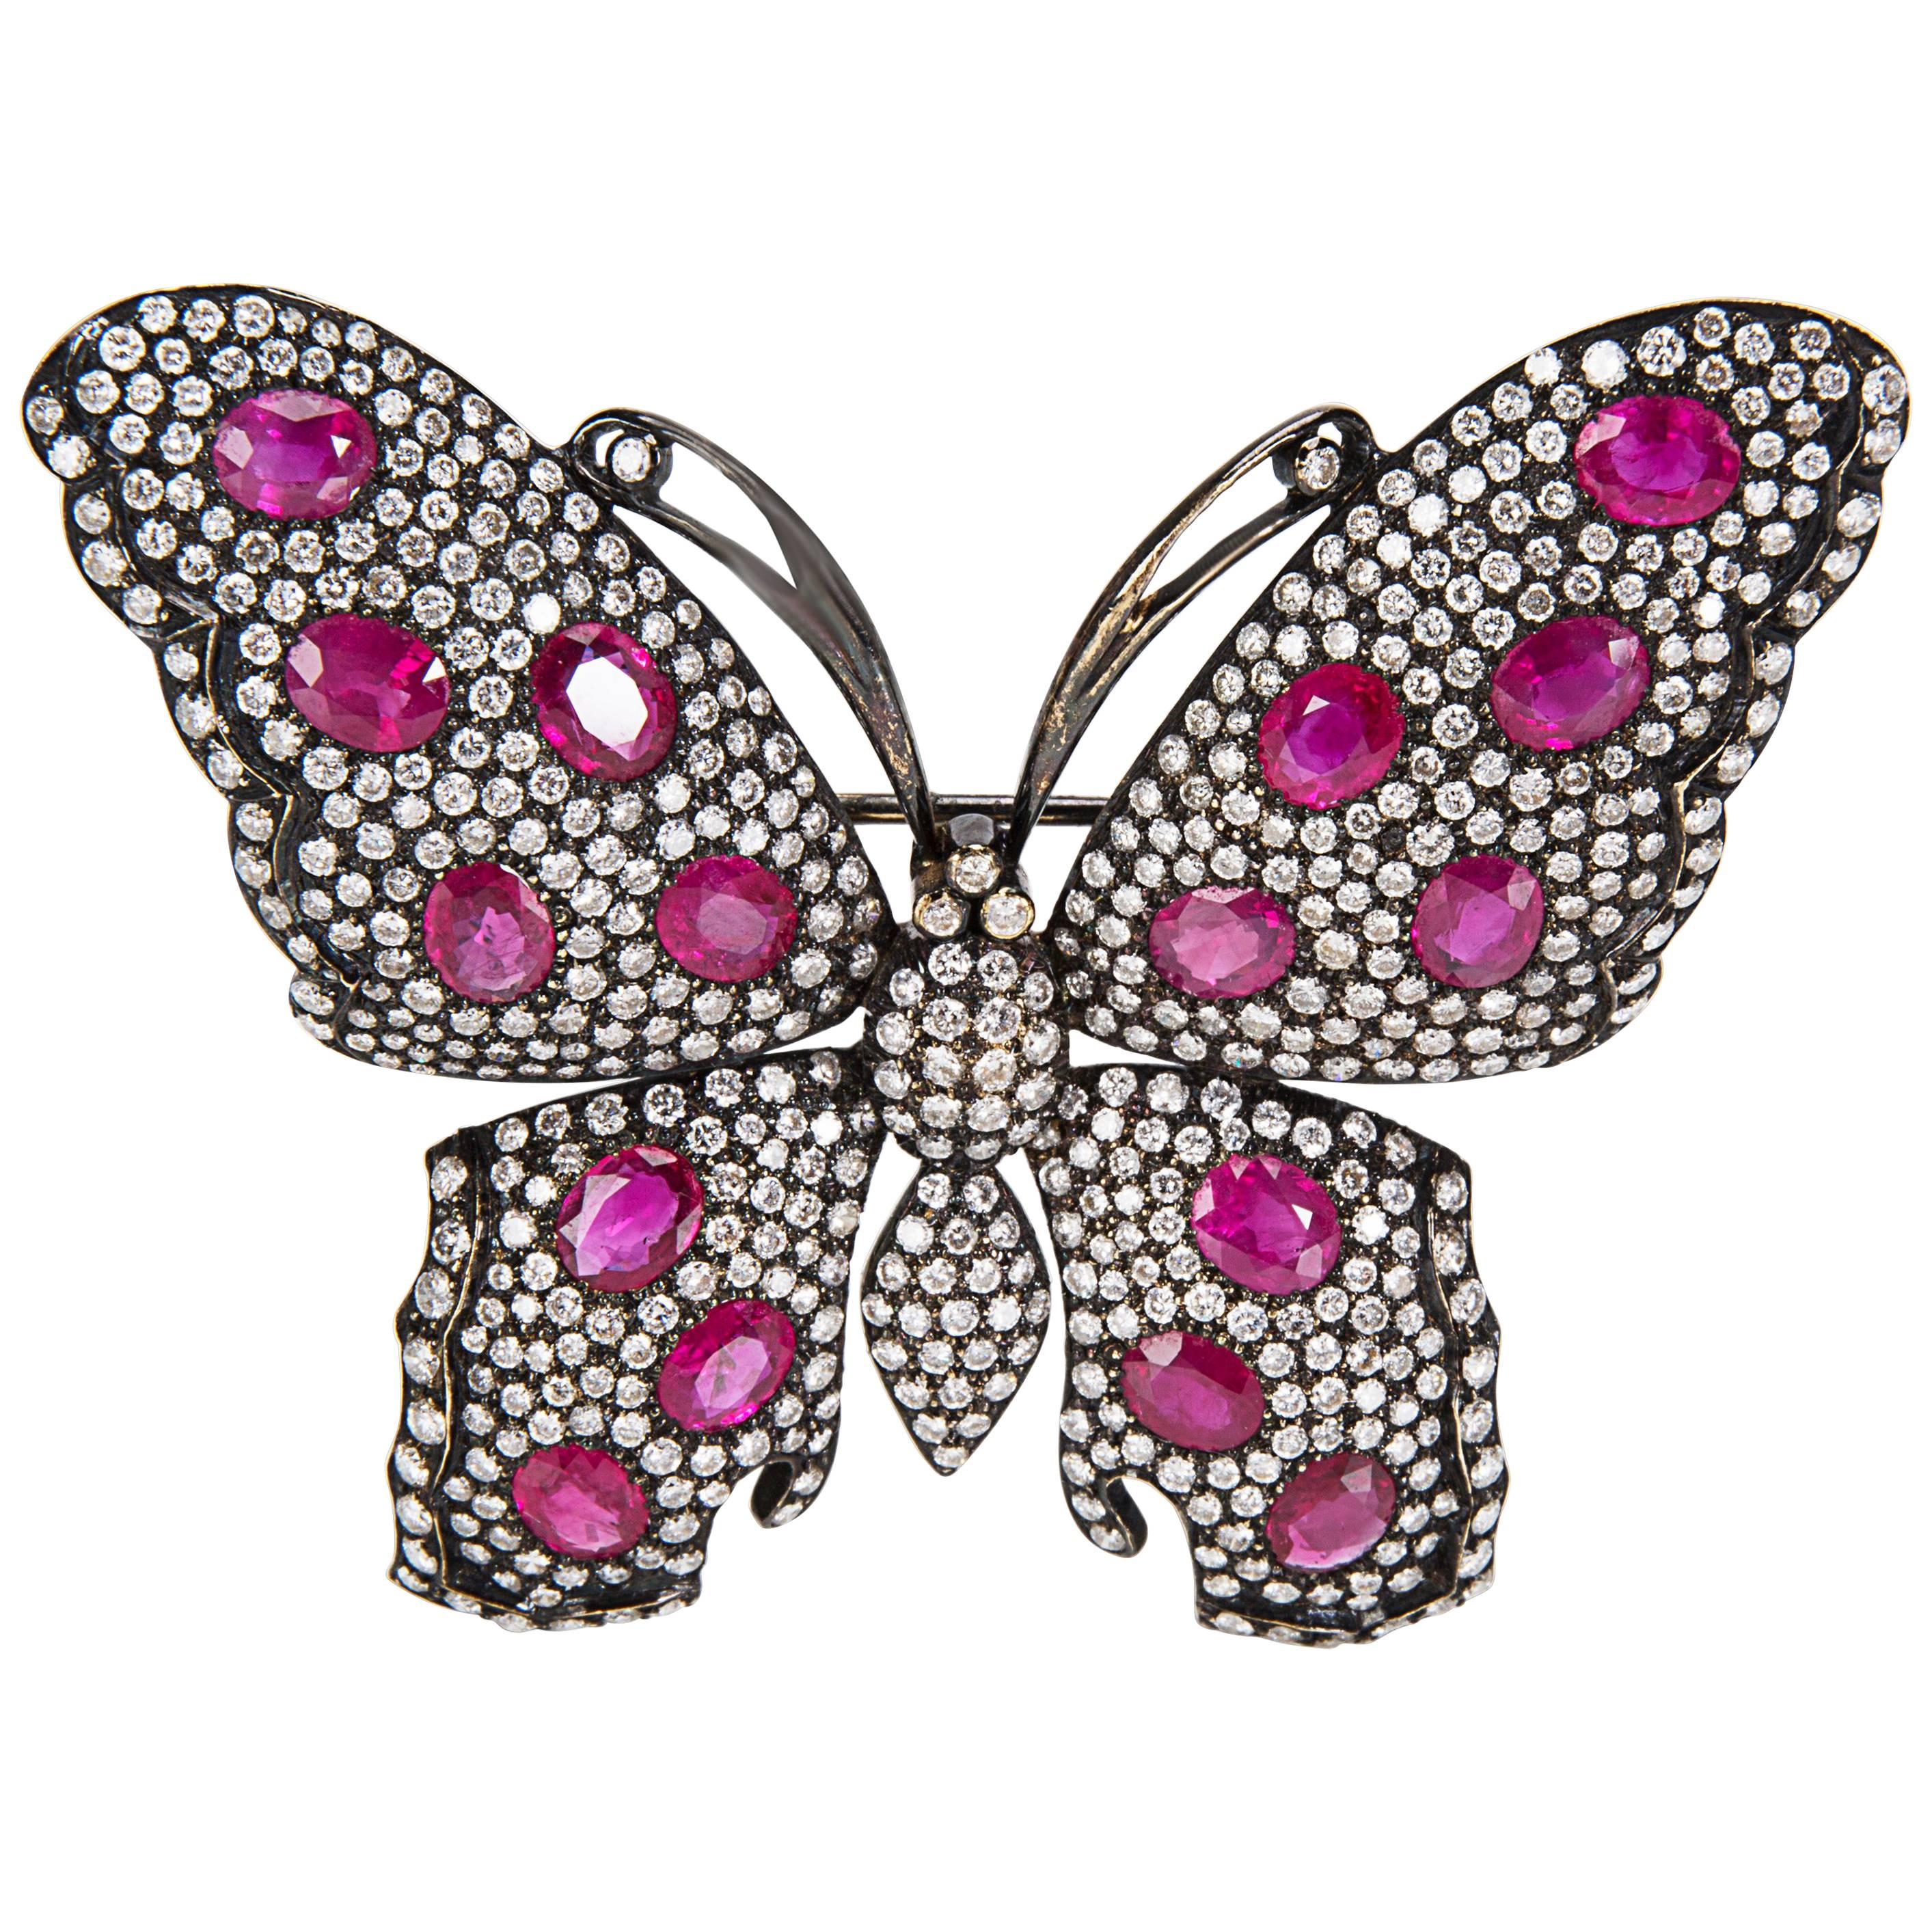 IGL Certified Diamond and Ruby Butterfly Brooch in 18 Karat Gold 6.25 Carat